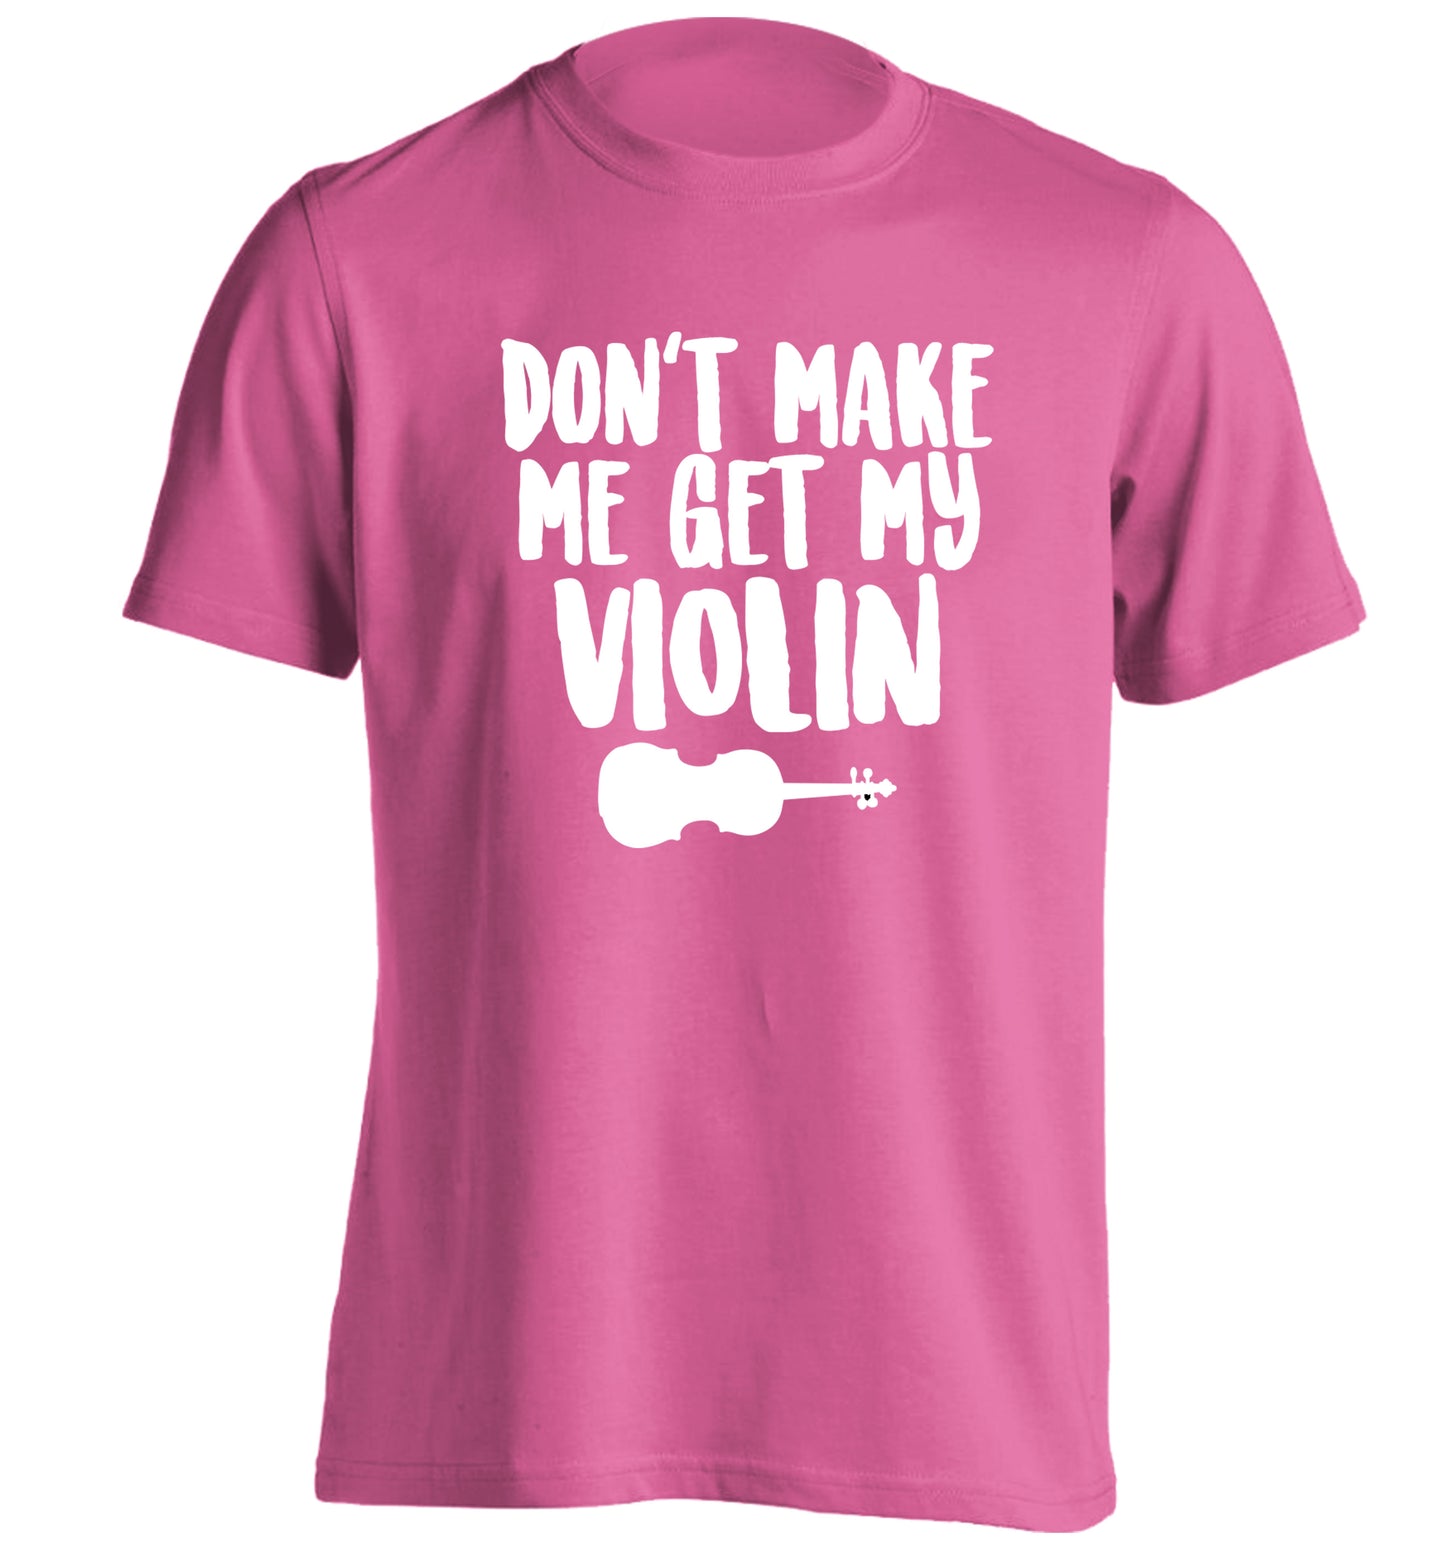 Don't make me get my violin adults unisex pink Tshirt 2XL